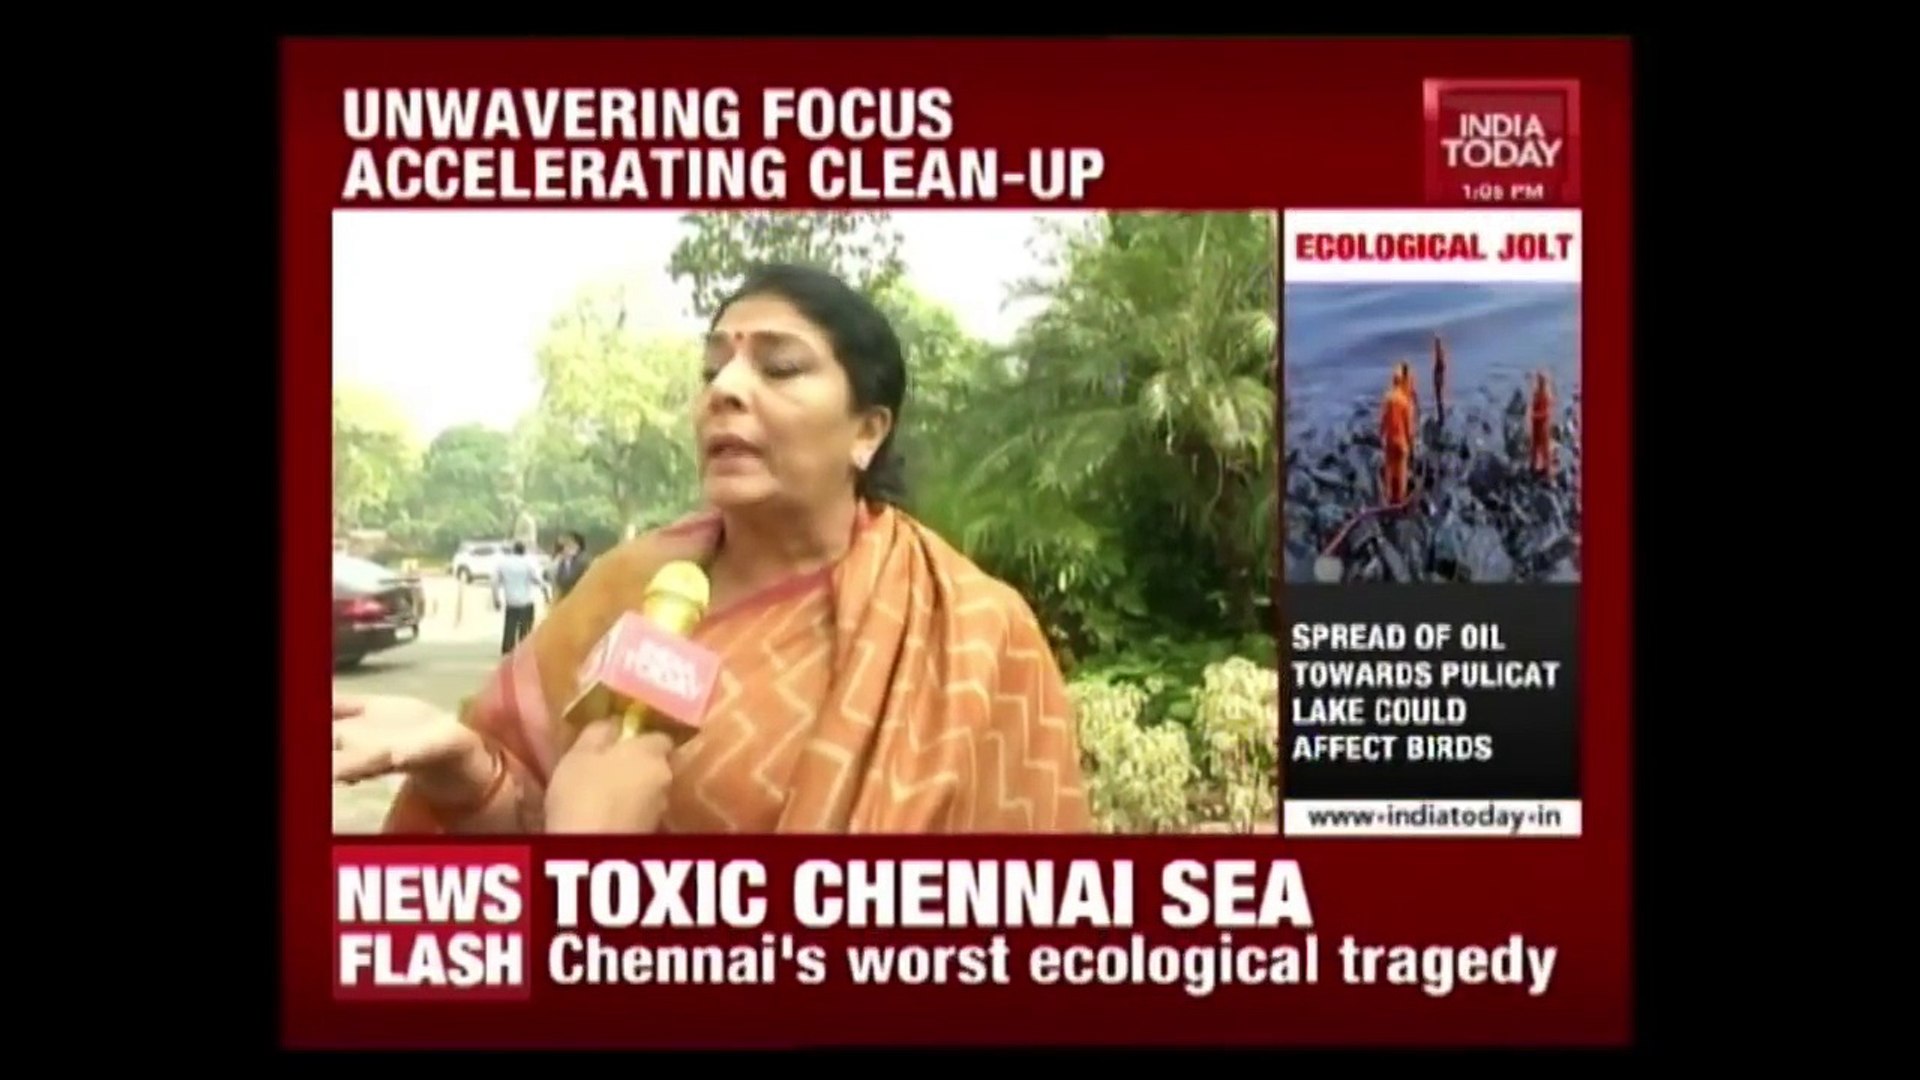 60 Tonnes Of Slug Removed In The Massive Cleanup At Chennai Coastal